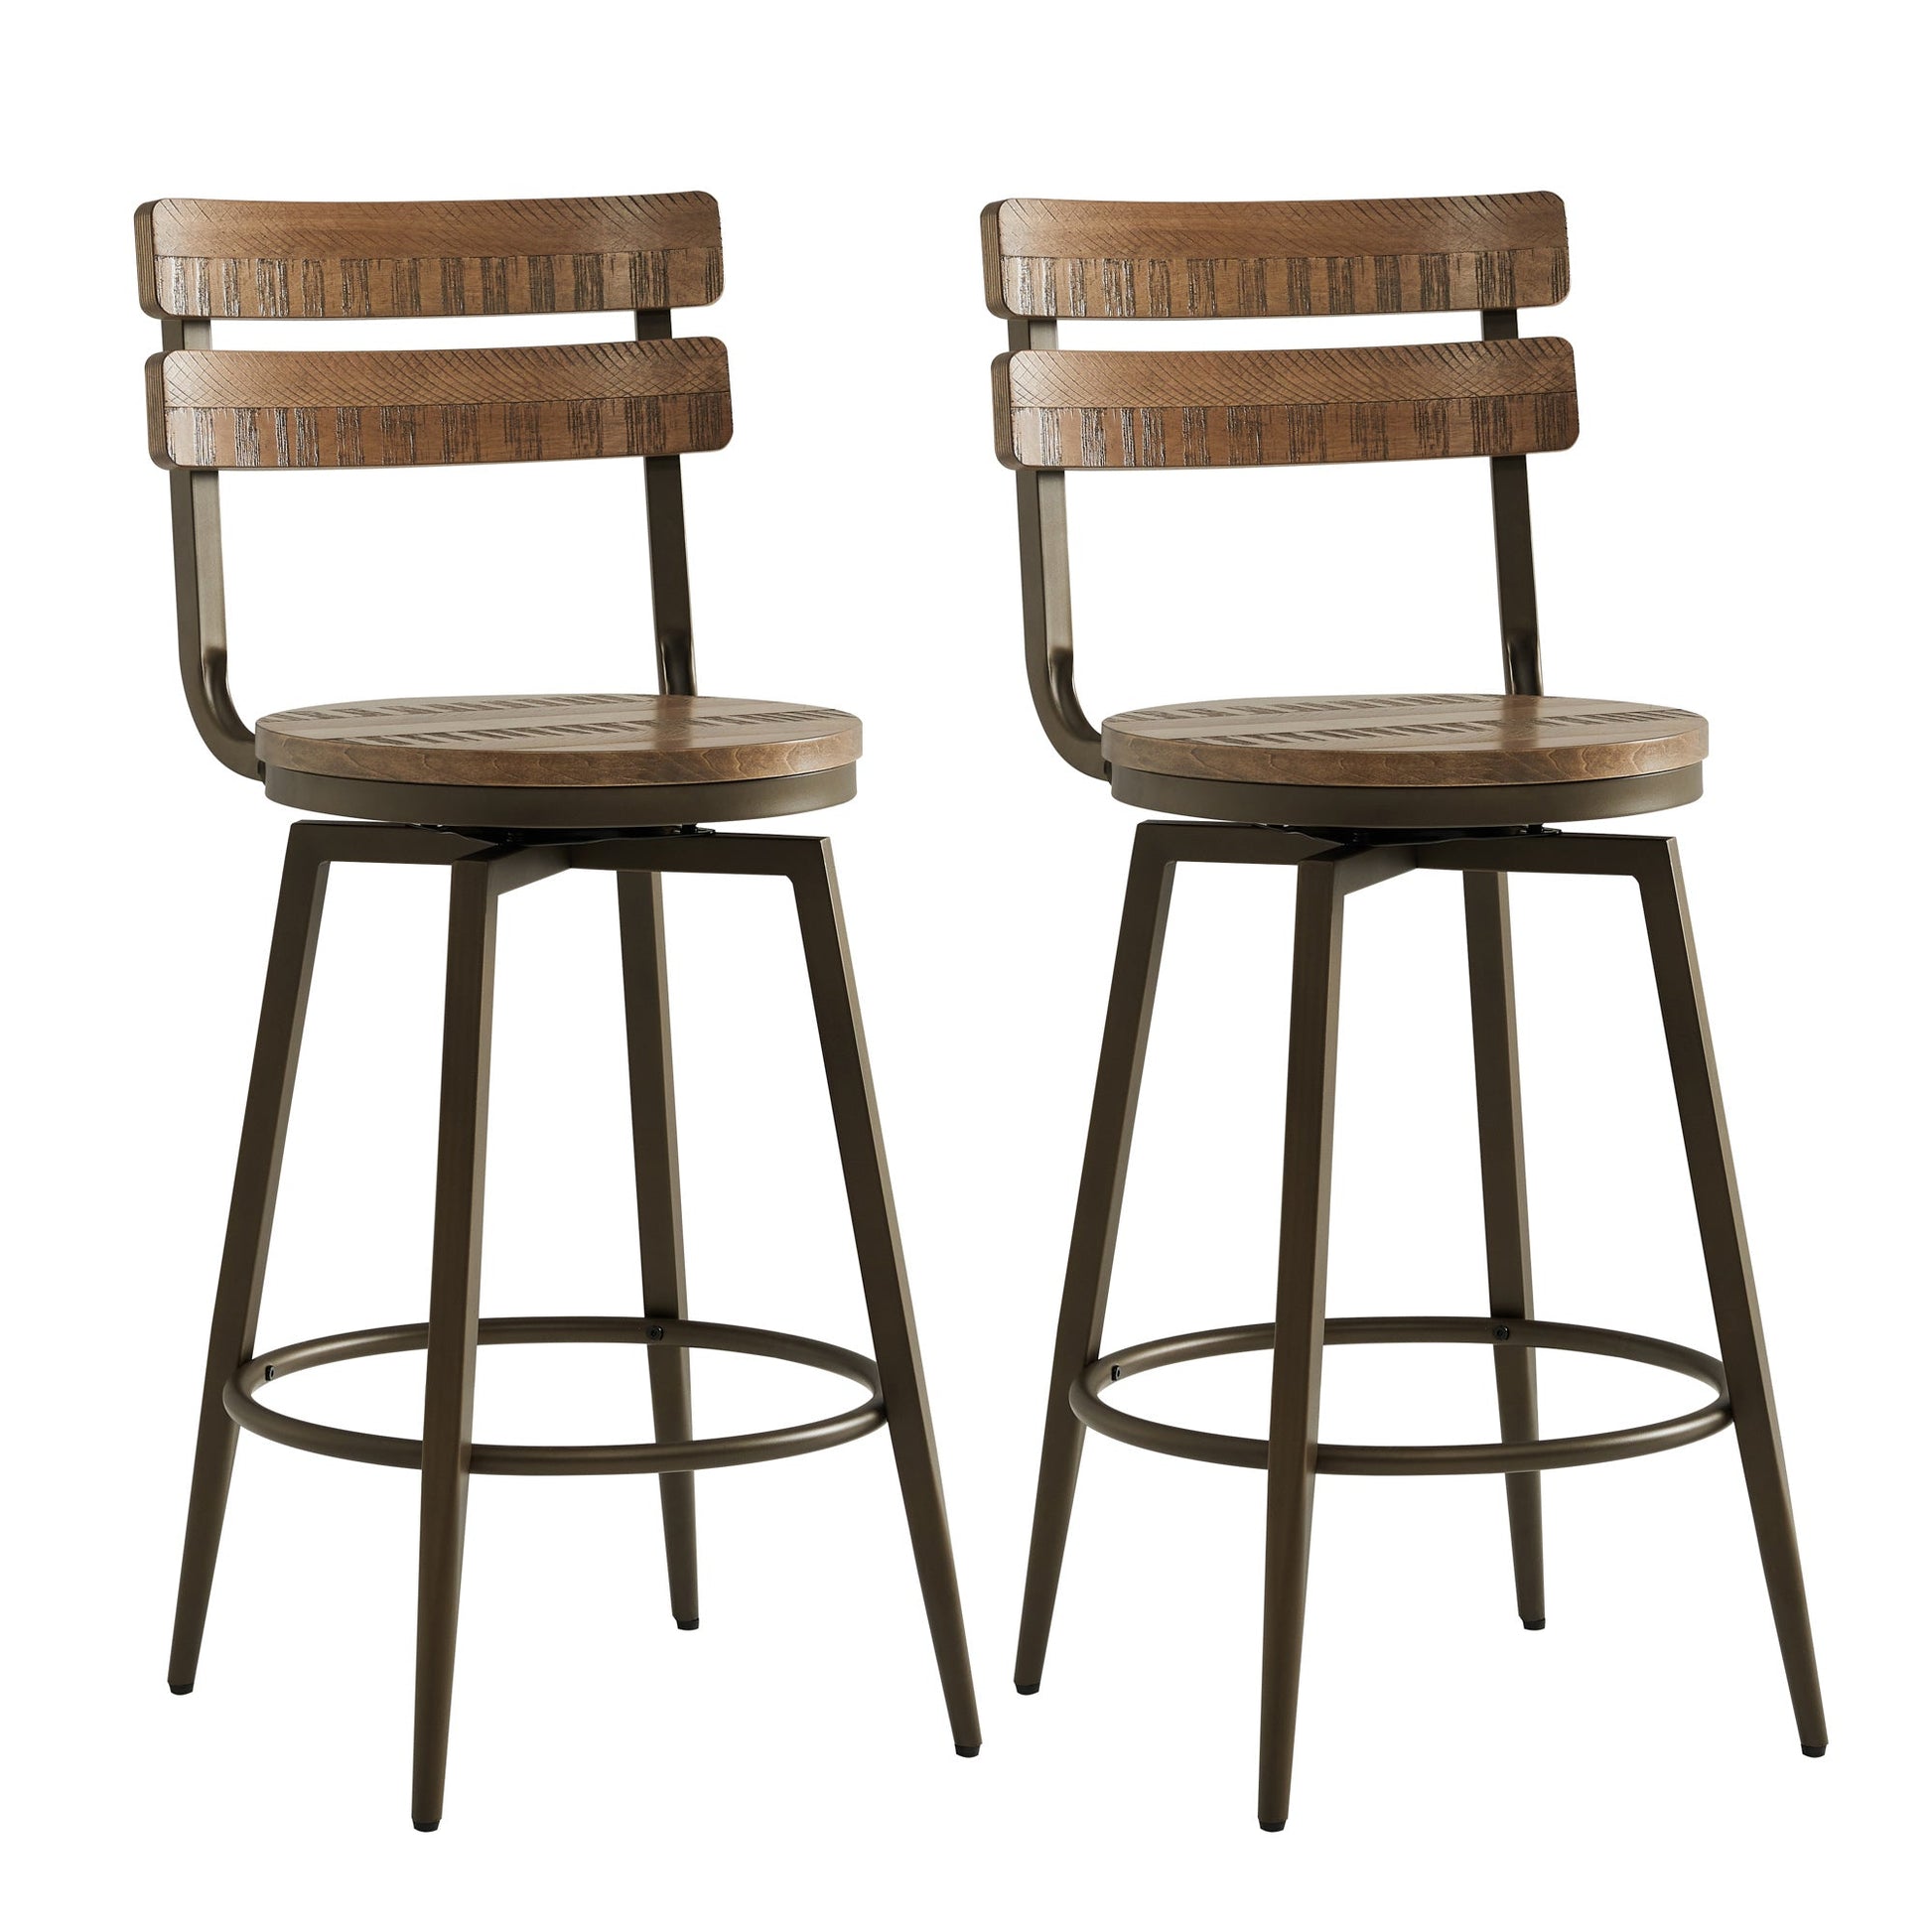 CHITA LIVING-Blair Industrial Wood Seat Counter Stools-Counter Stools-Wood-Brown-Set of 2